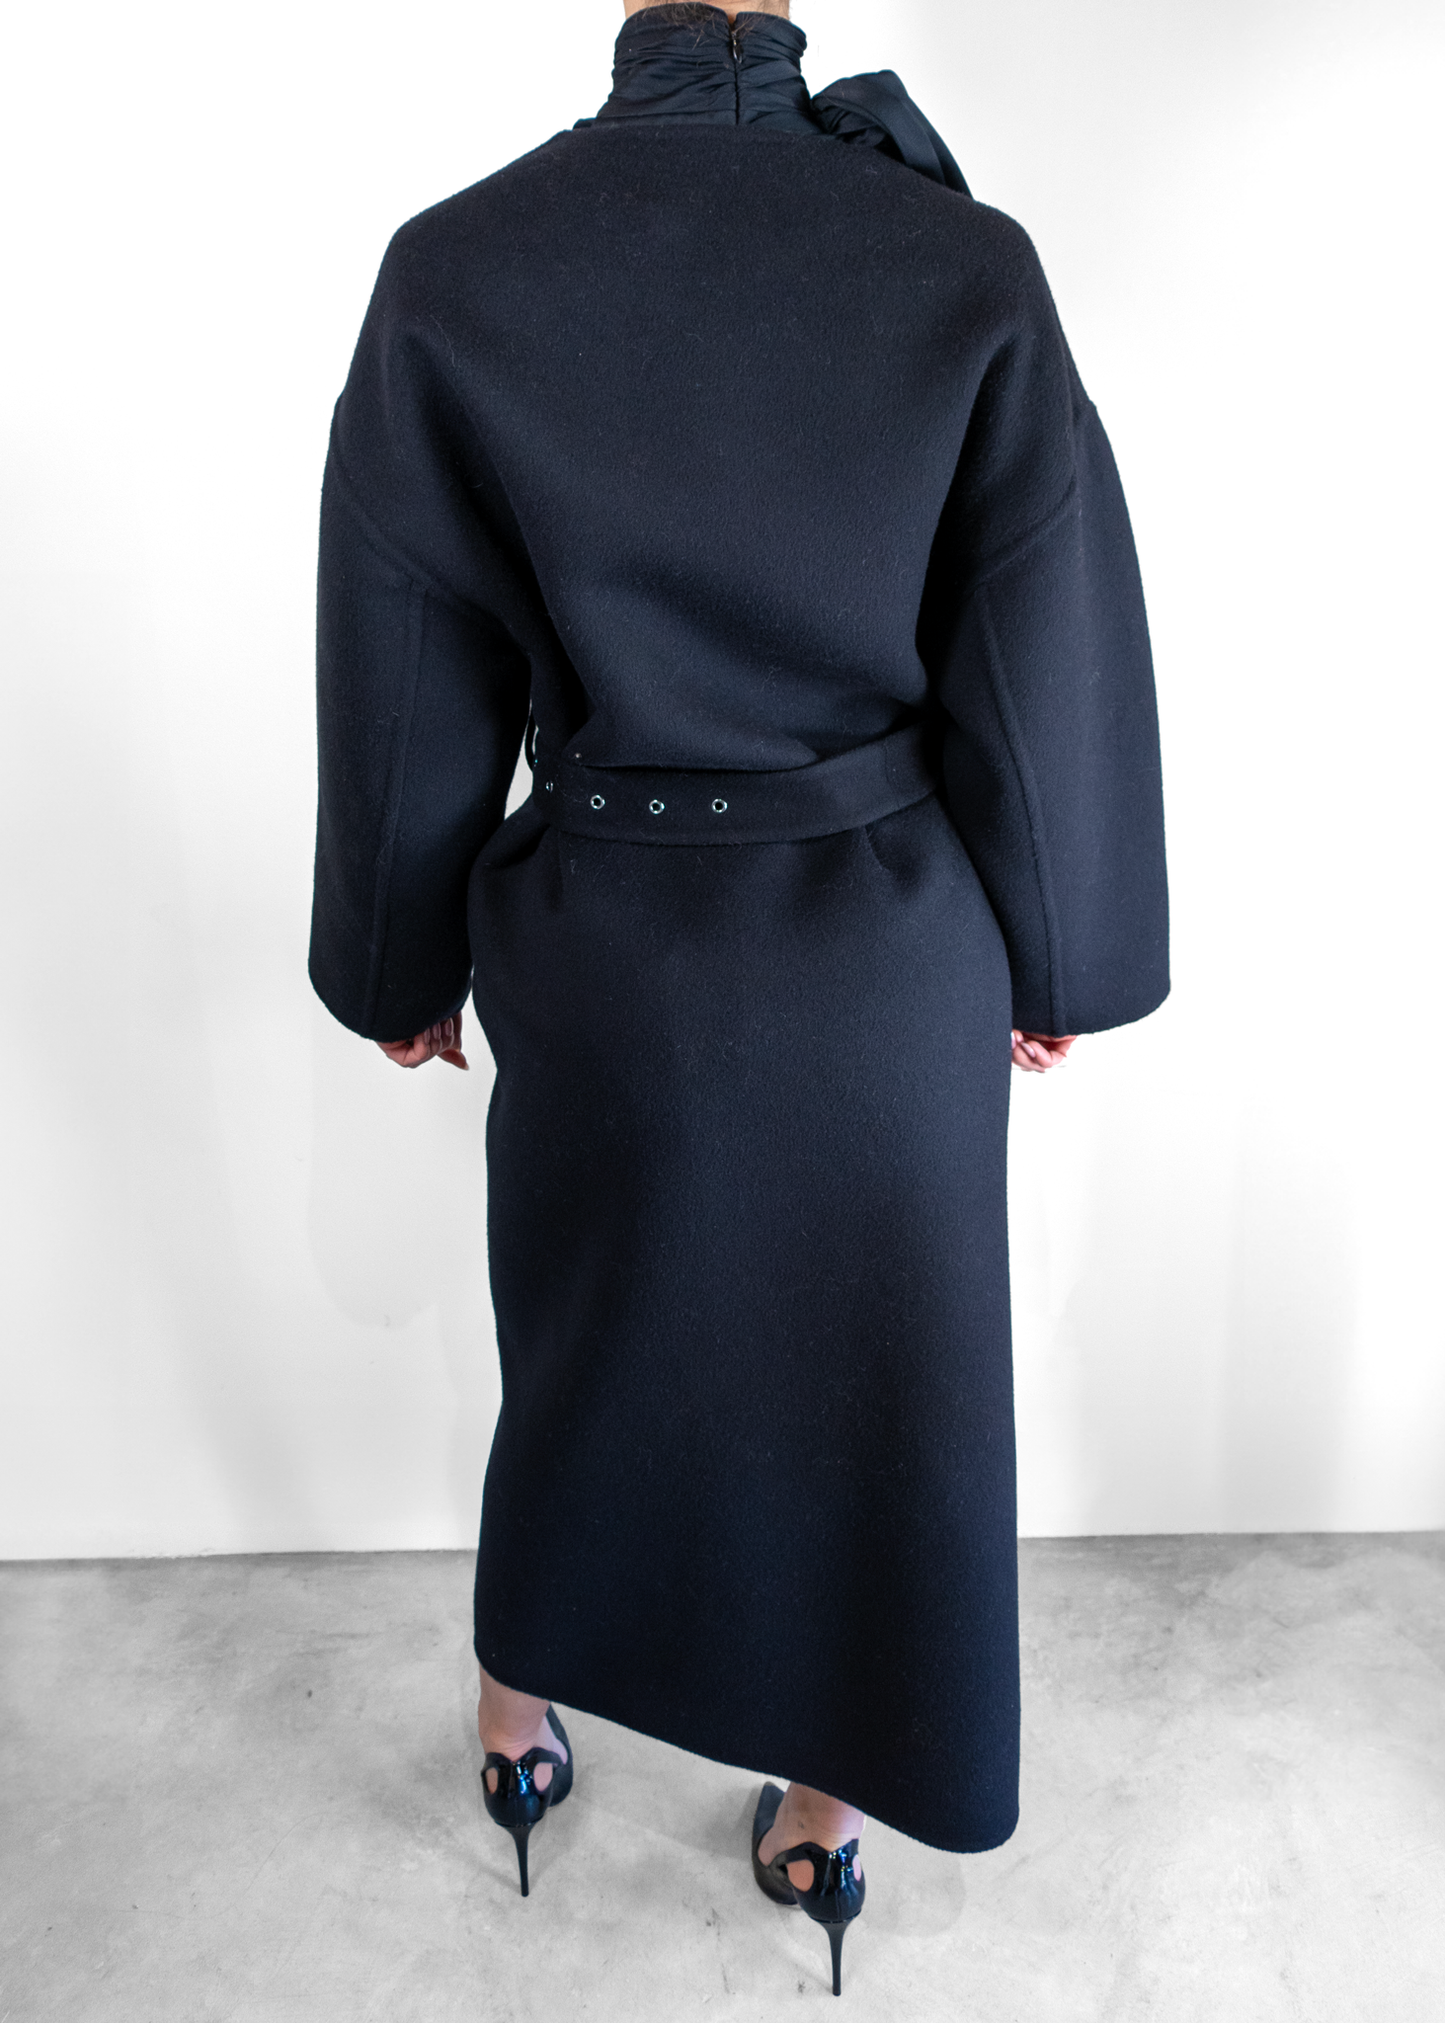 Christian Dior Black Wool Coat